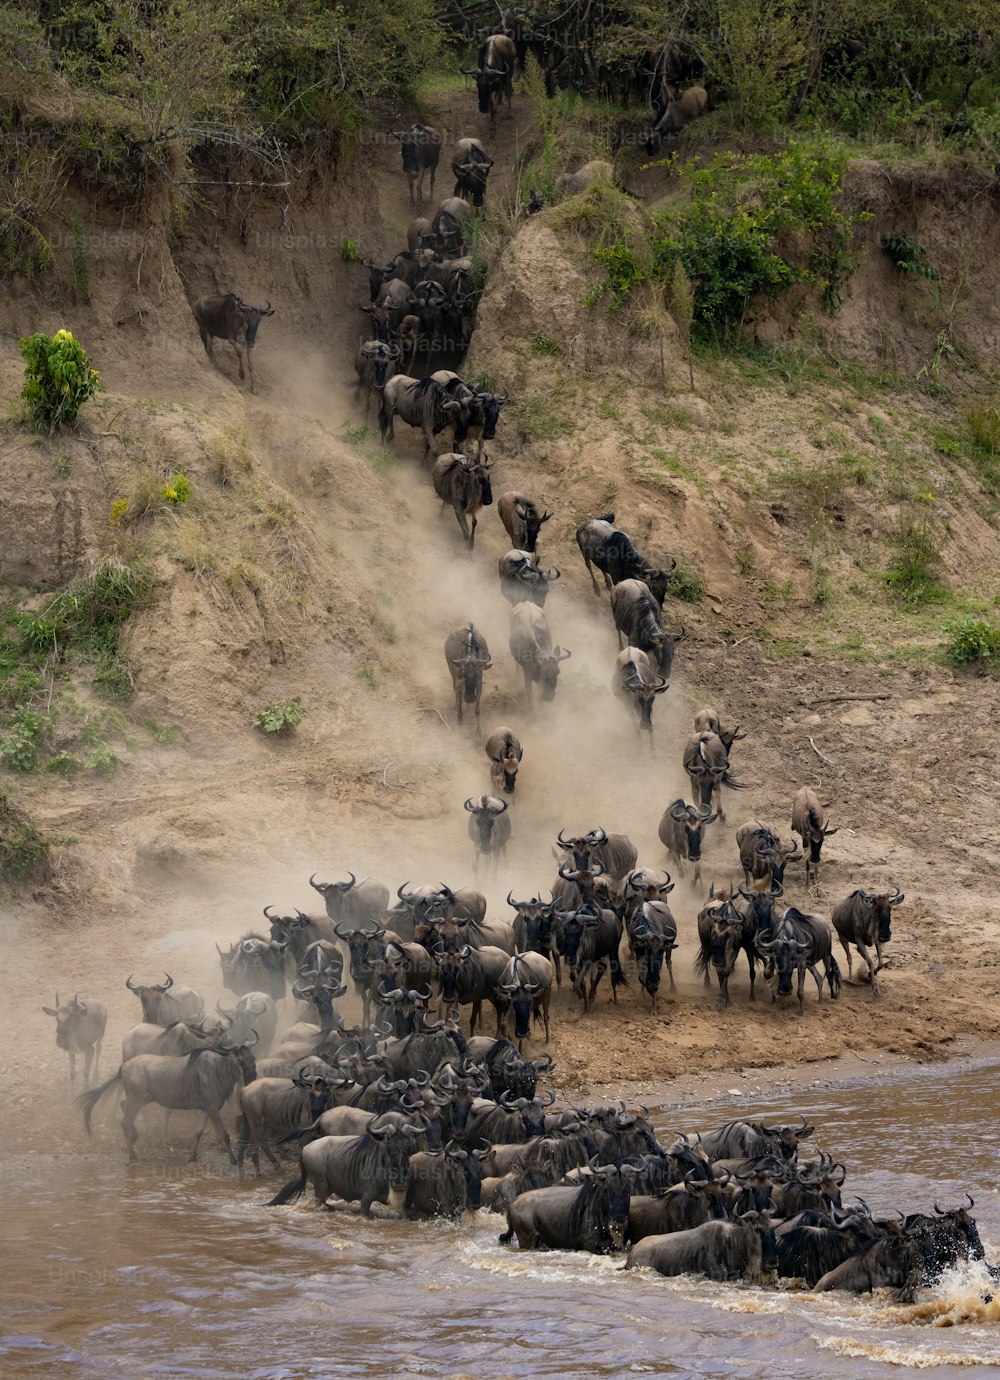 La migrazione degli gnu in Africa